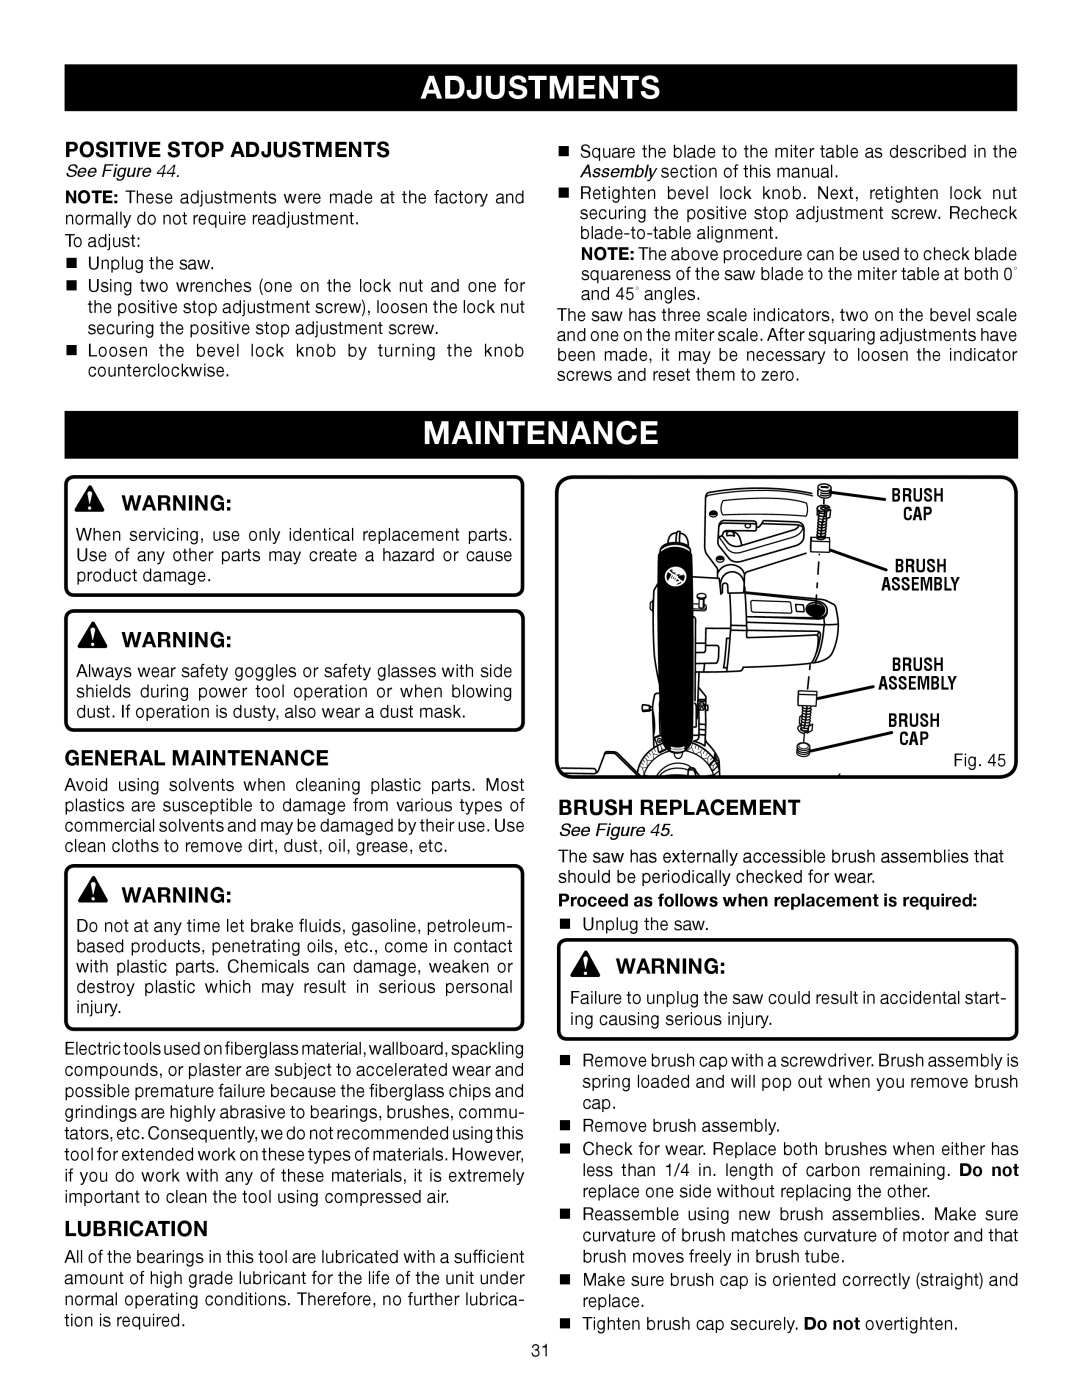 Ryobi TS1552DXL manual Positive Stop Adjustments, General Maintenance, Lubrication, Brush Replacement, See Figure 